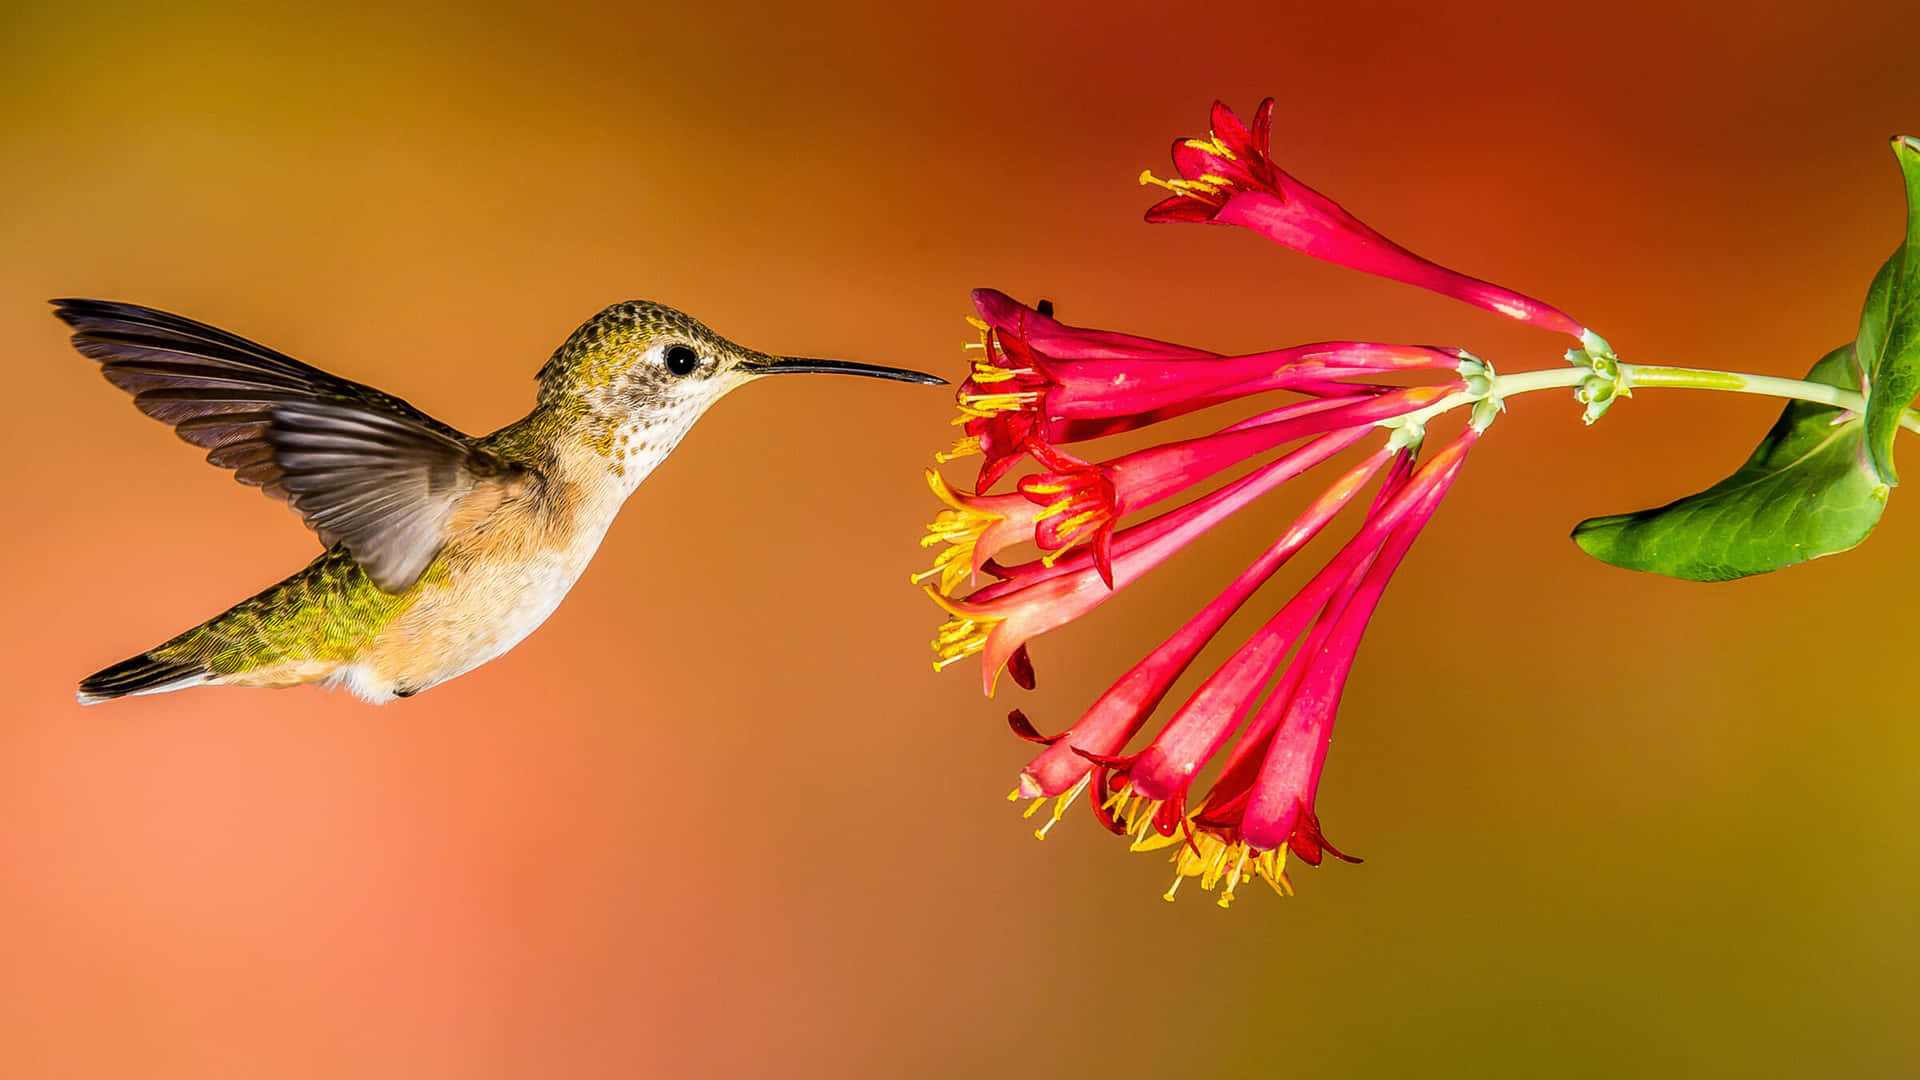 A female hummingbird feeding on nectar